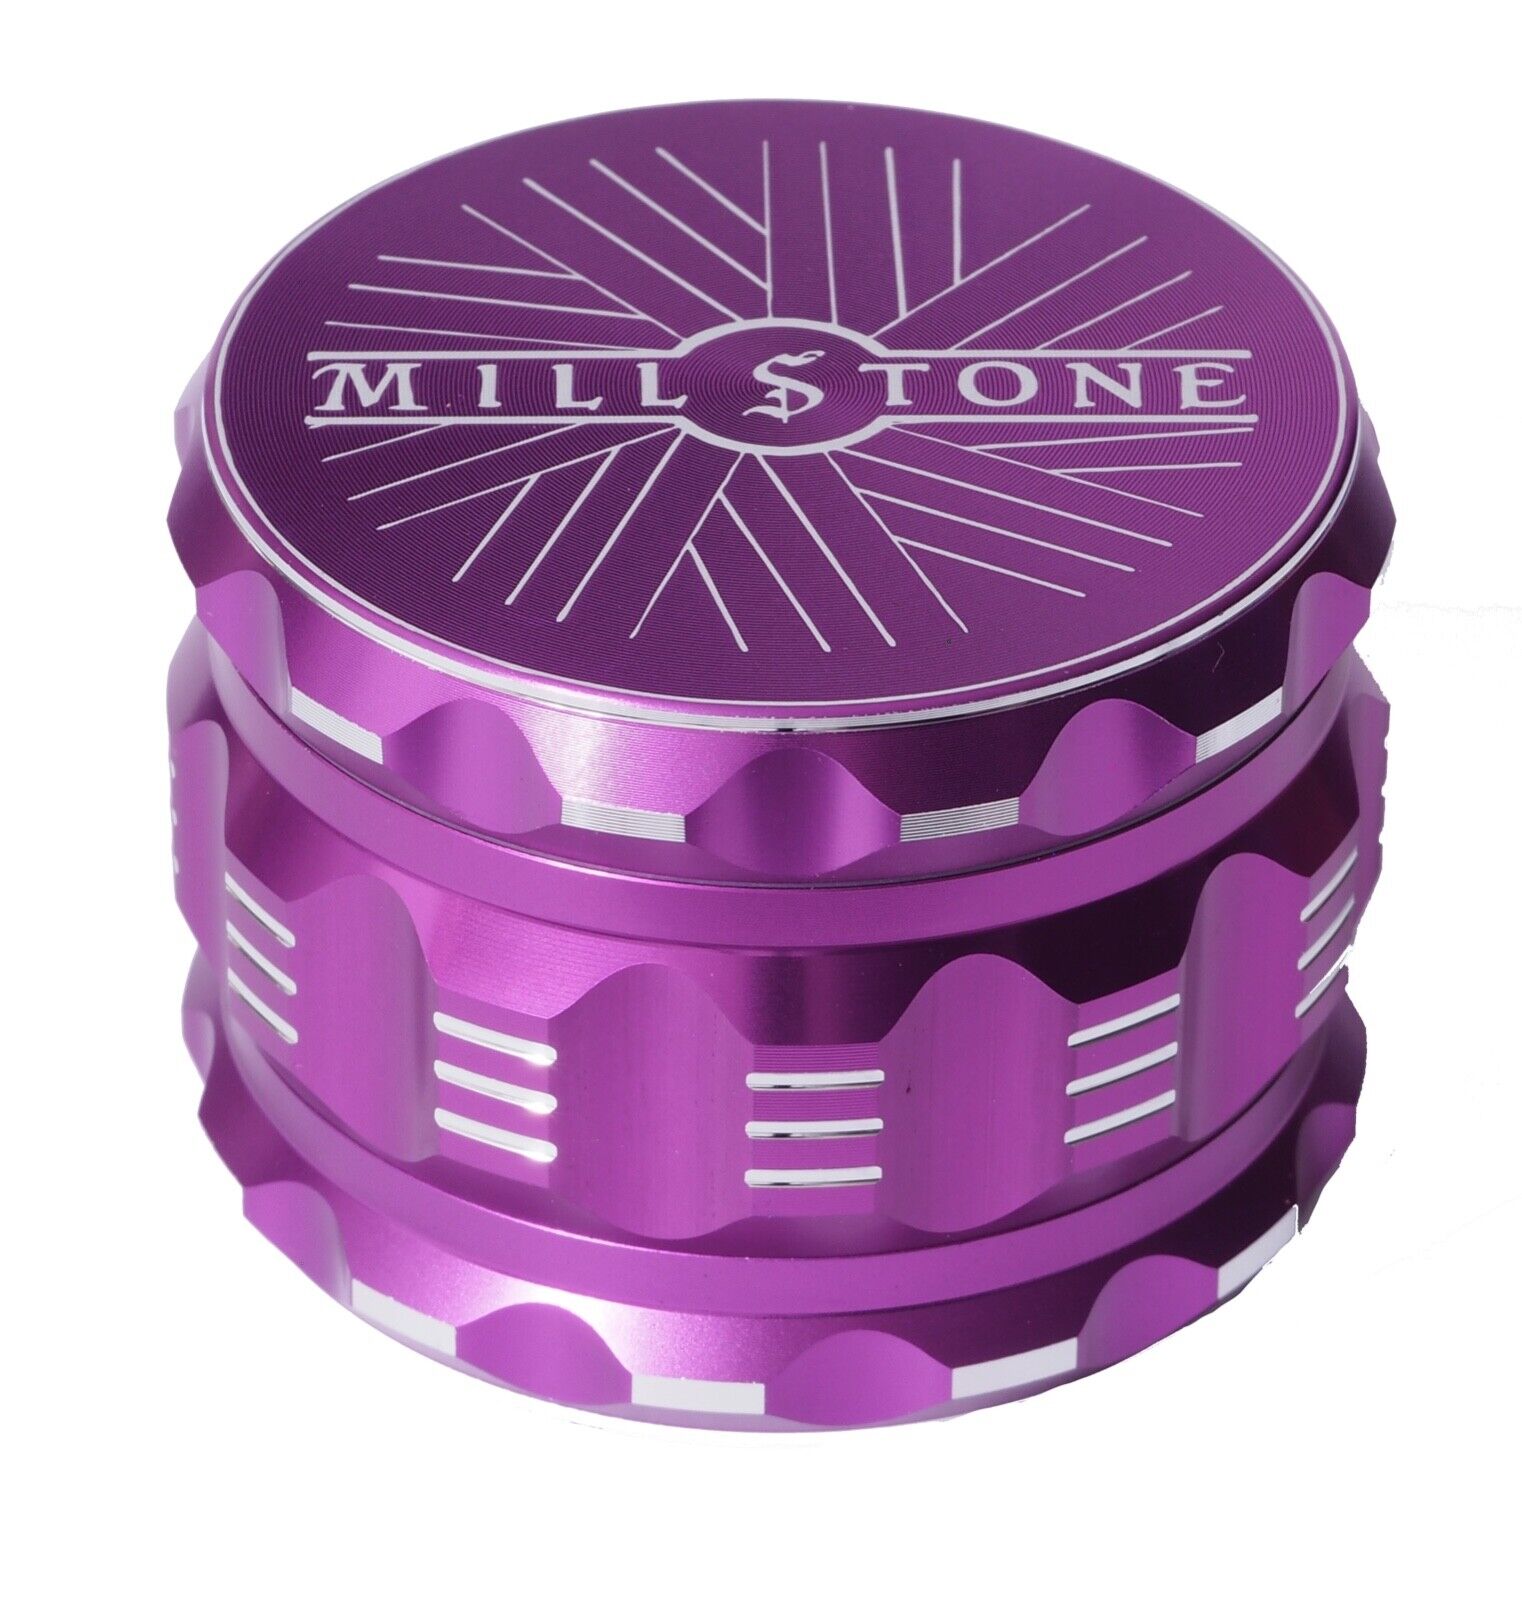 Millstone Herb Tobacco Grinder Large  4-Piece Metal 2.5 inch Magnetic Top Purple